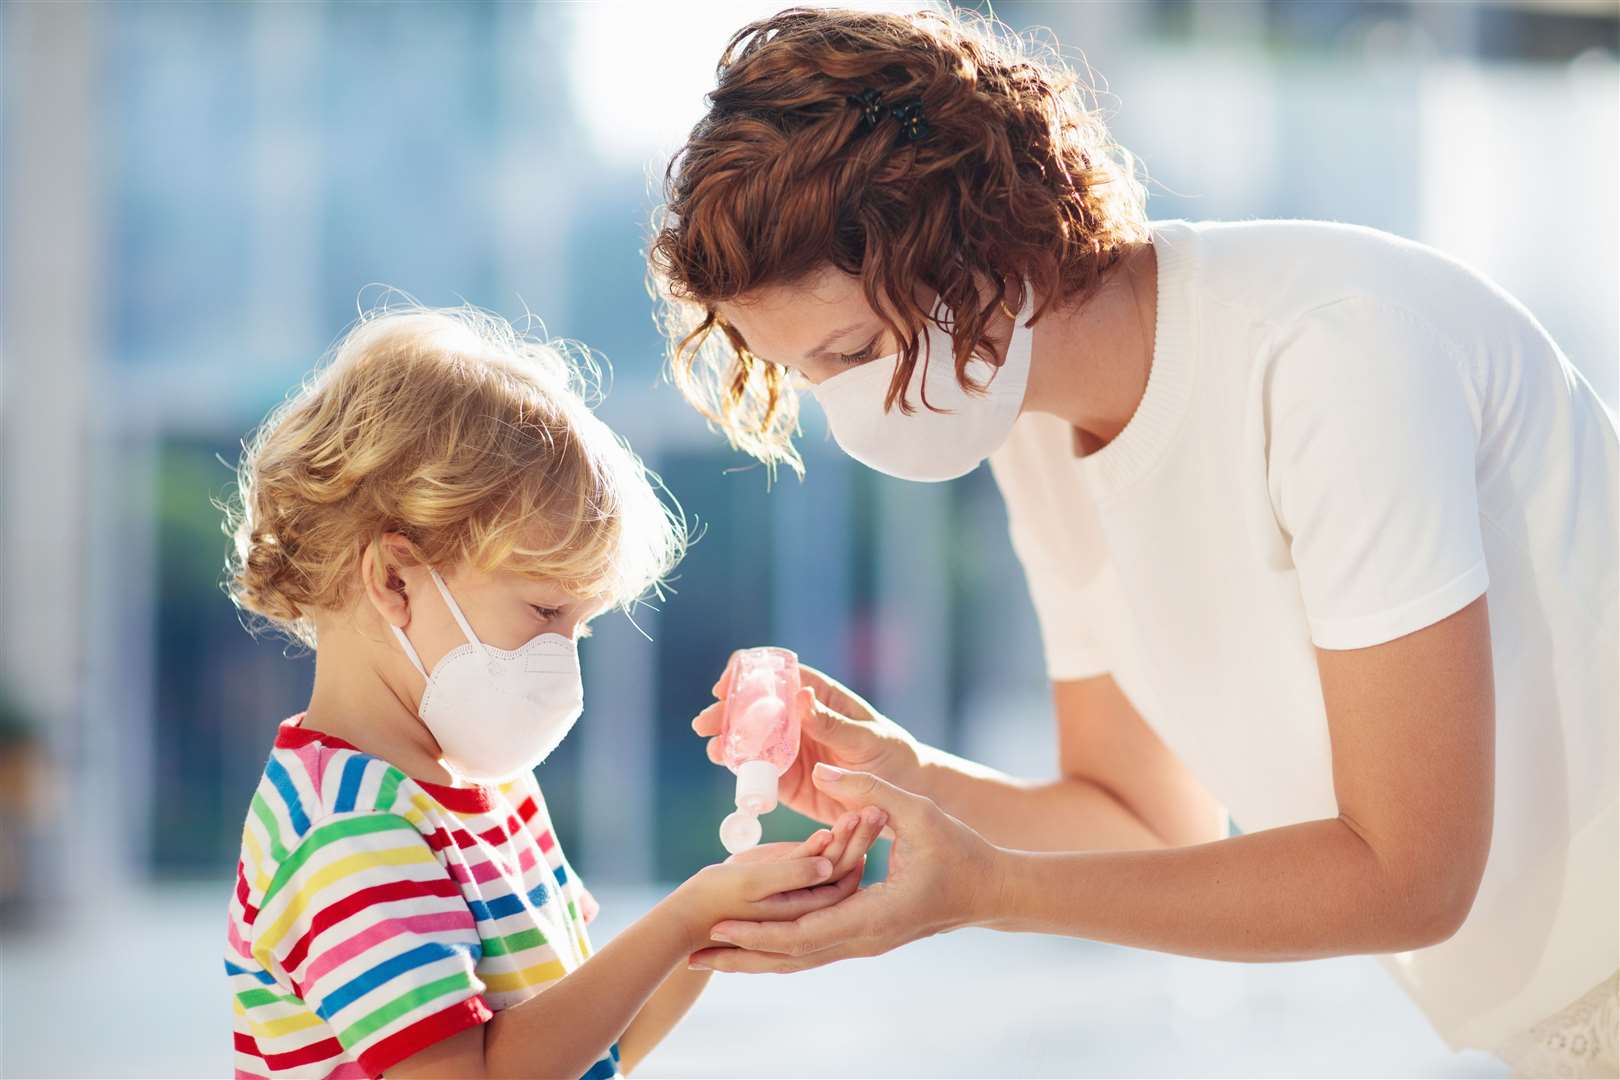 Face masks and hand sanitiser have become a big part of children's lives